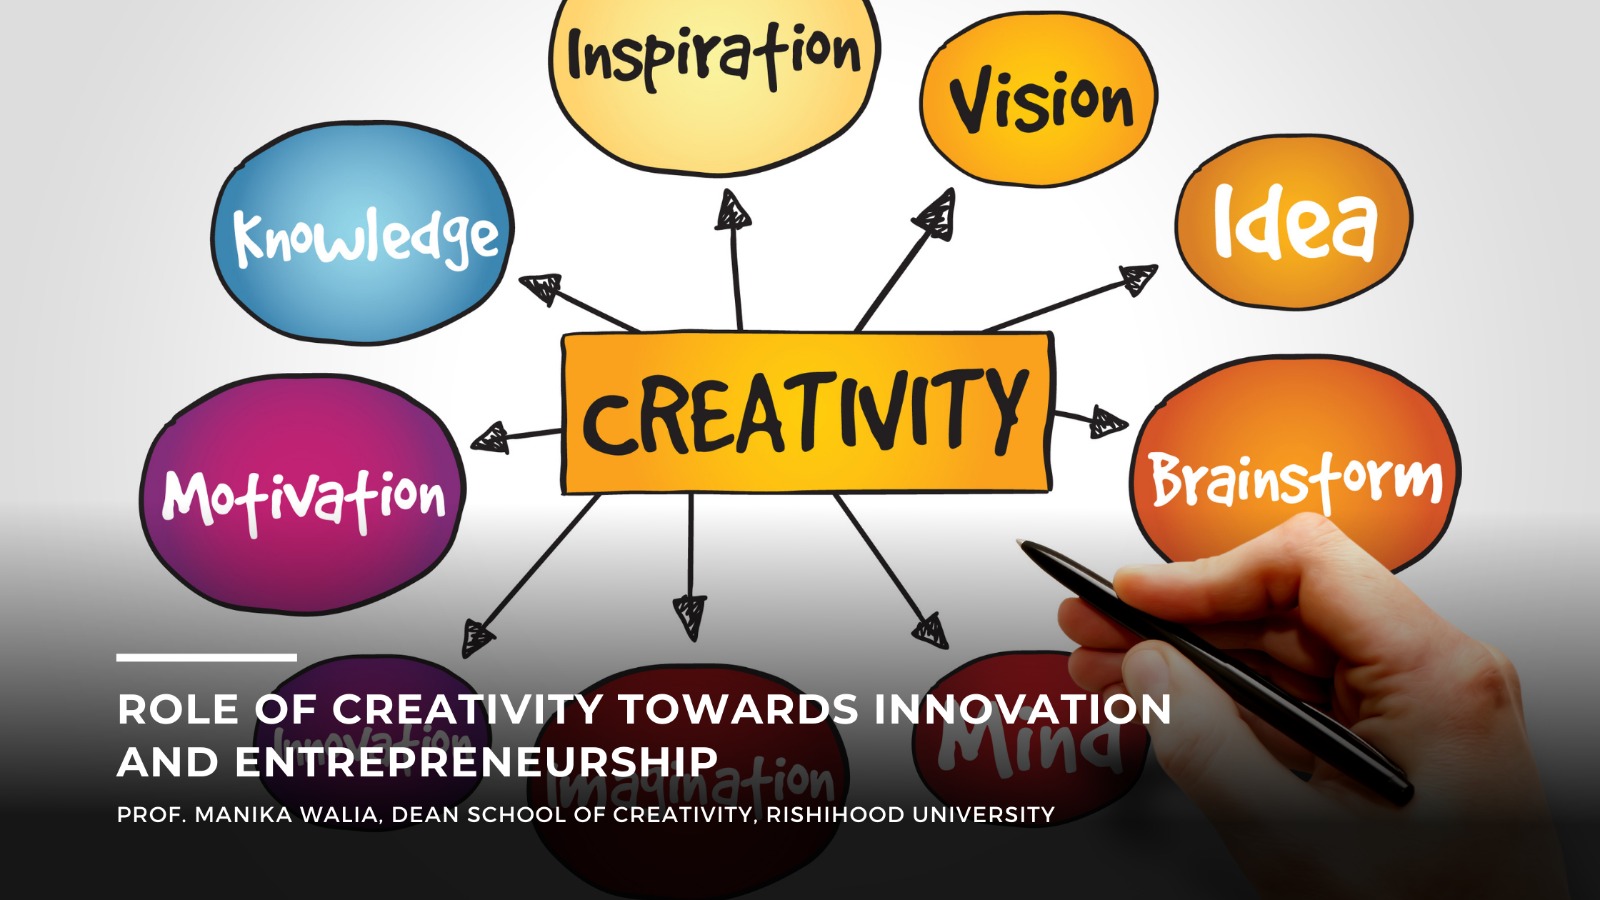 creativity and innovation